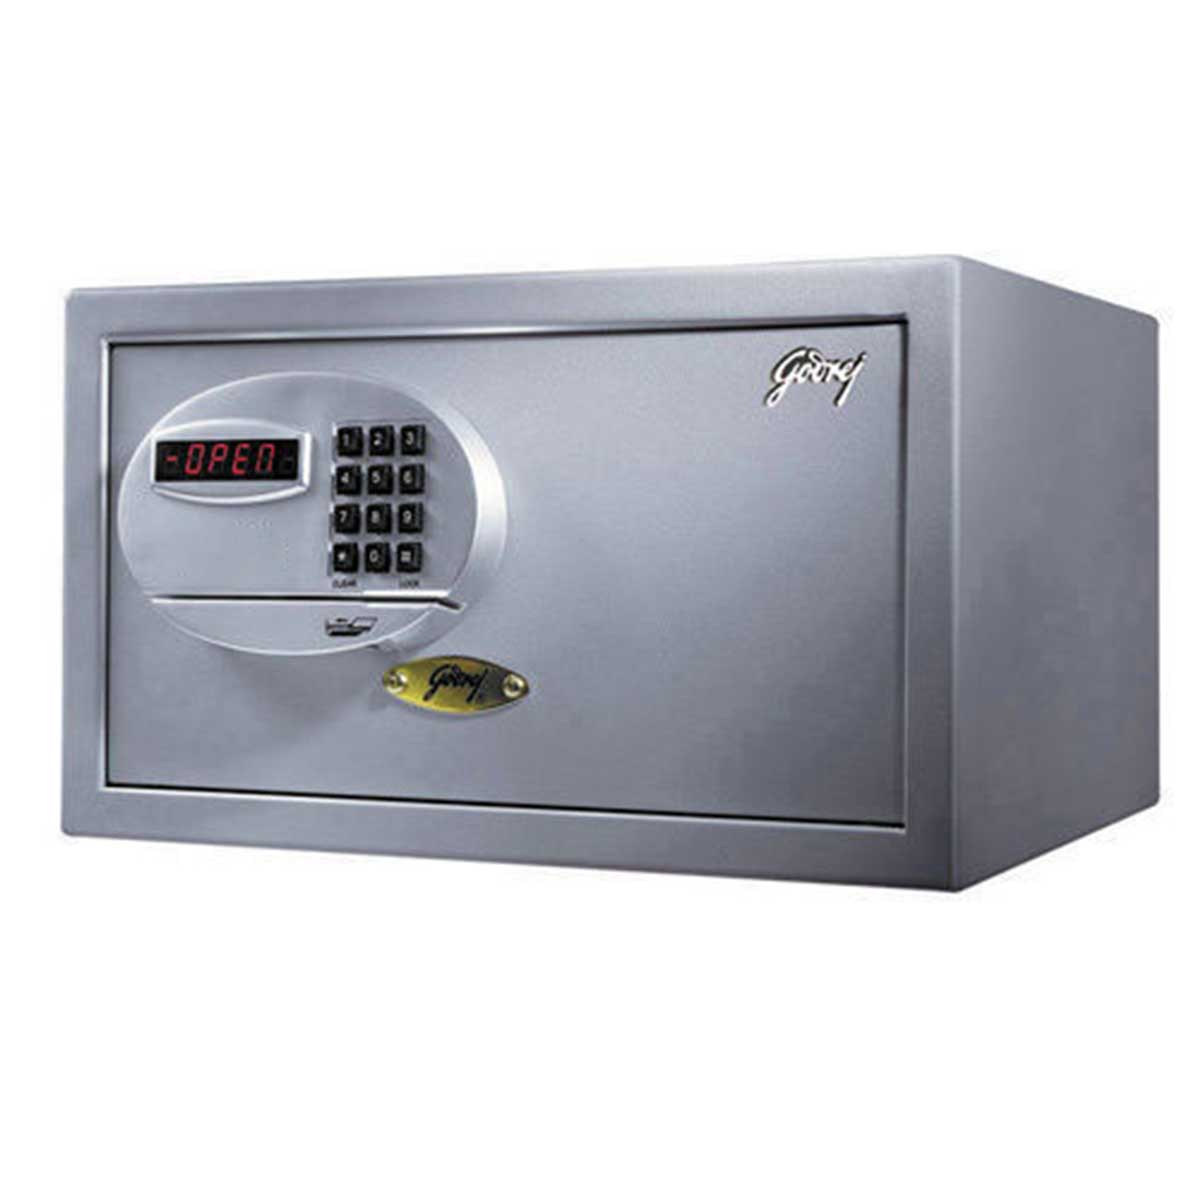 Electronic locker Manufacturers, Suppliers in Pushp Vihar